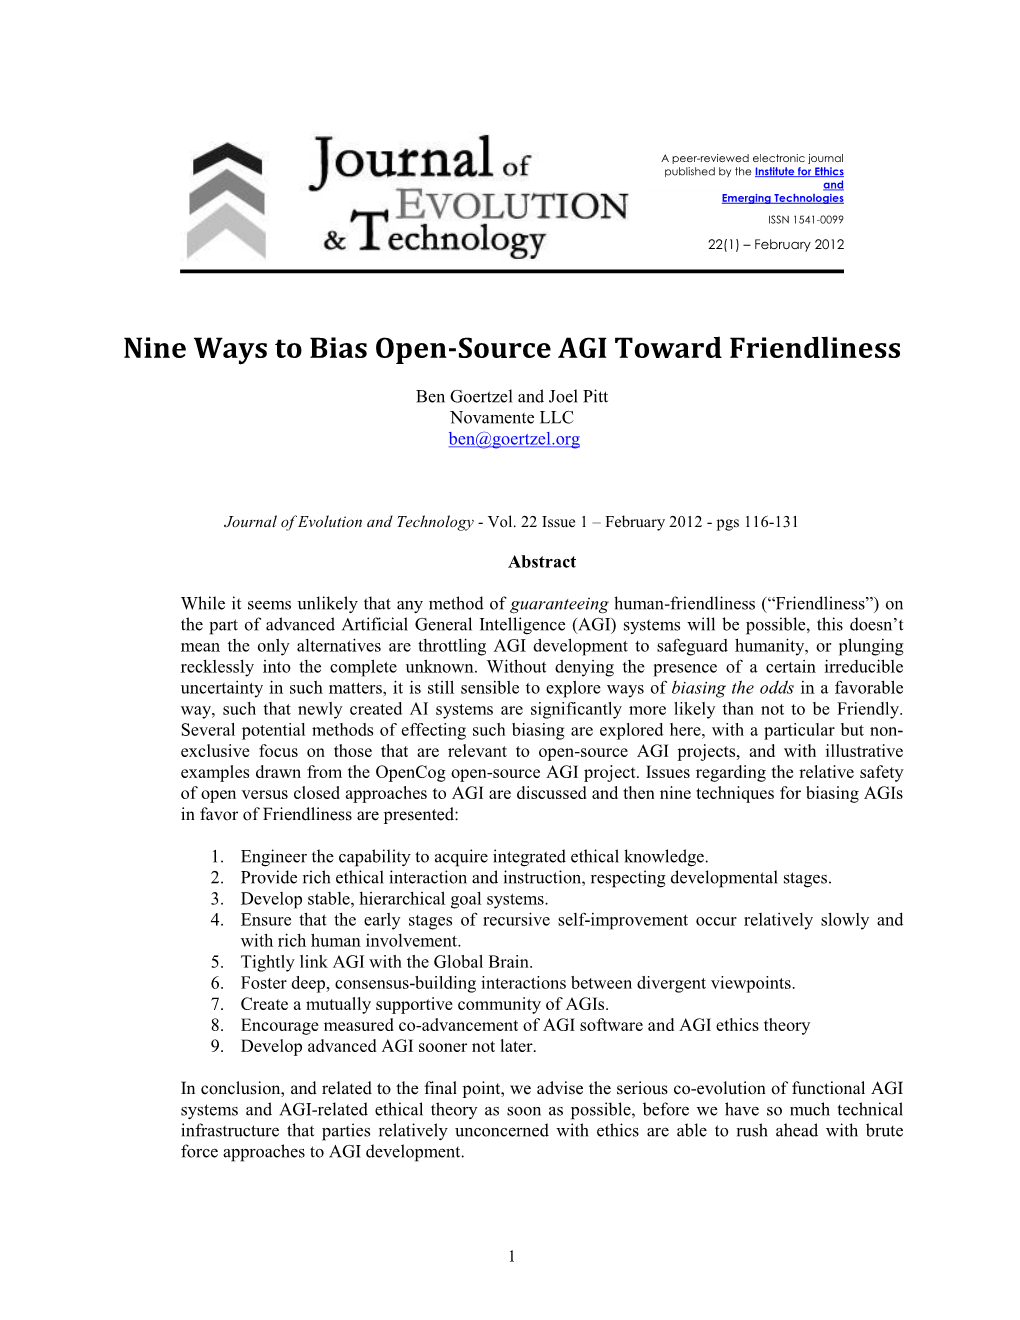 Nine Ways to Bias Open-Source AGI Toward Friendliness